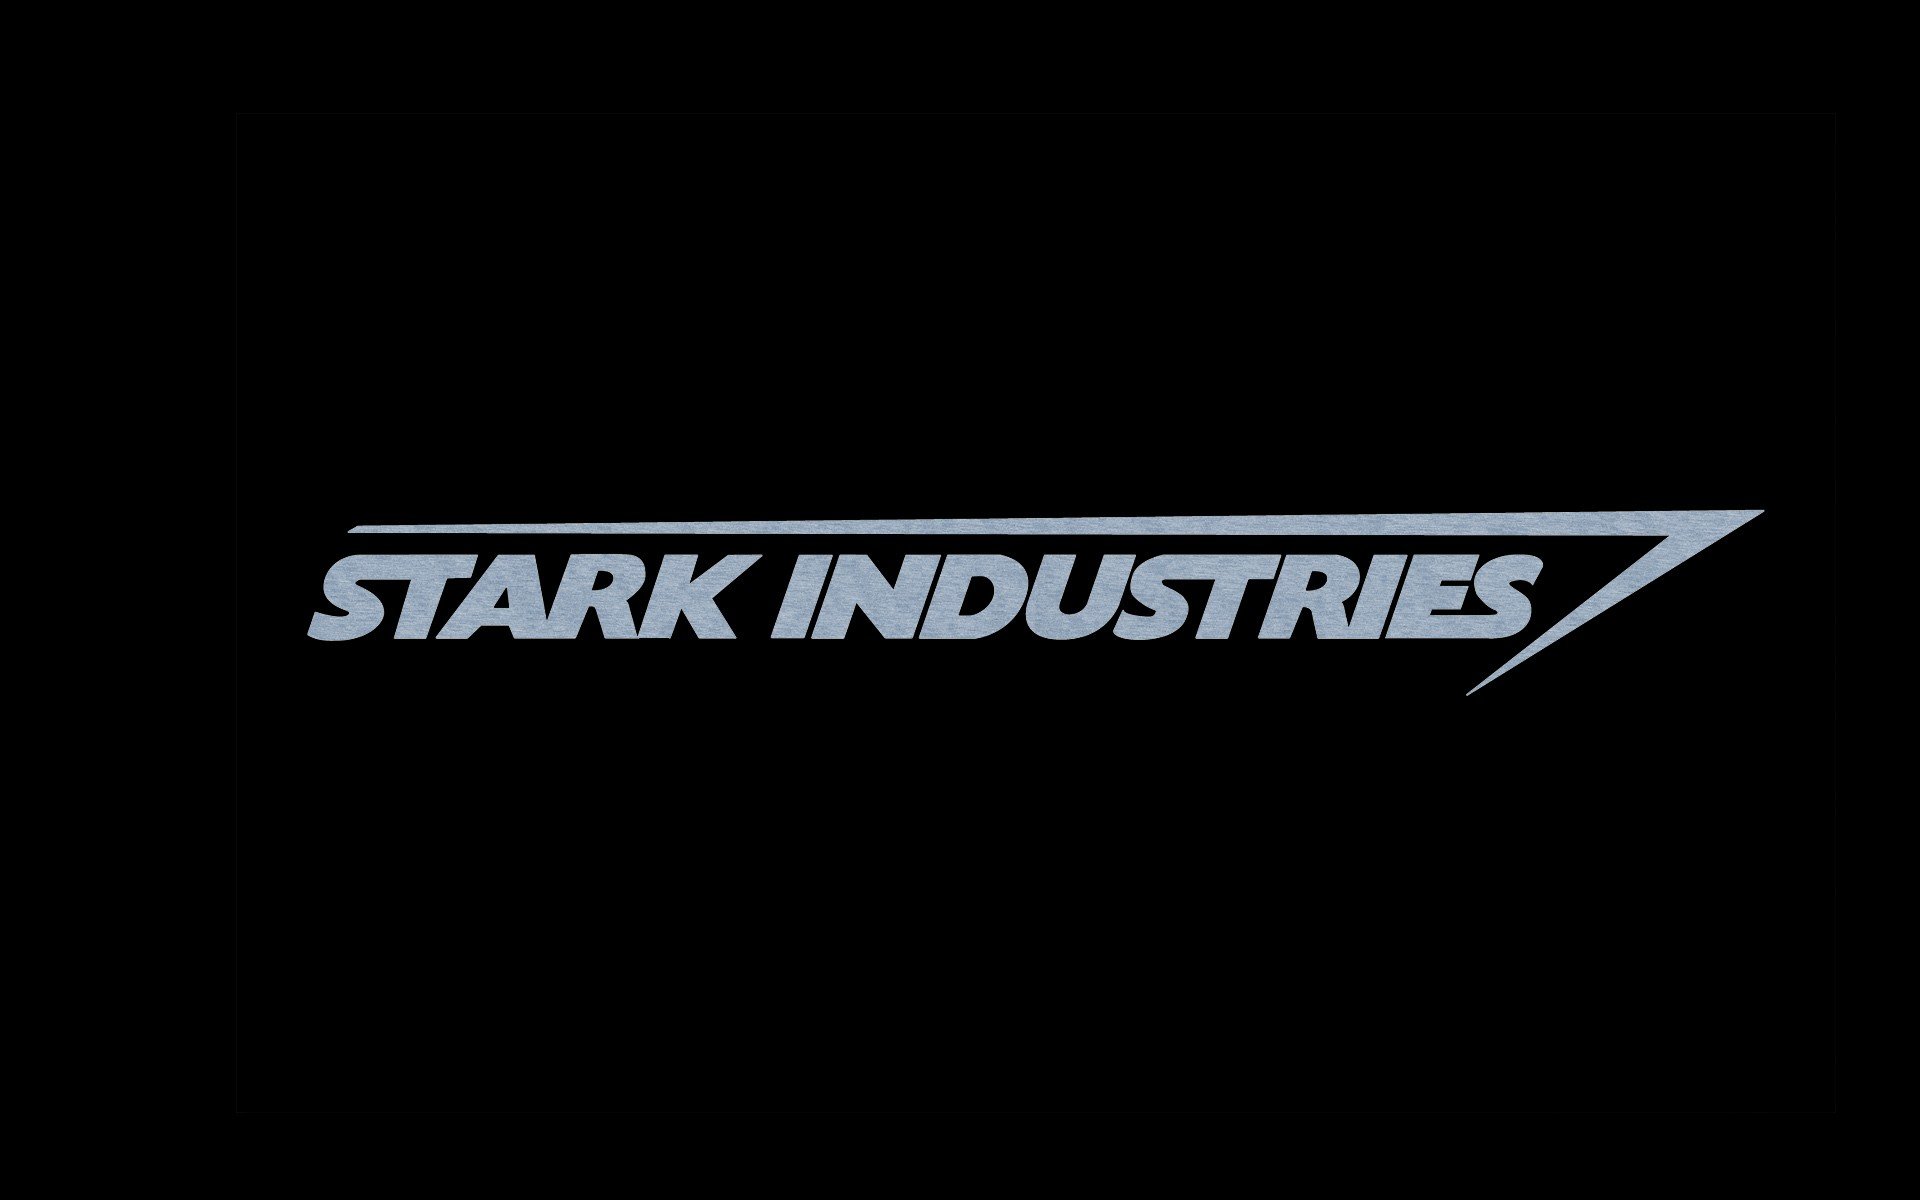 monochrome, Black background, Stark Industries, Marvel Comics Wallpaper